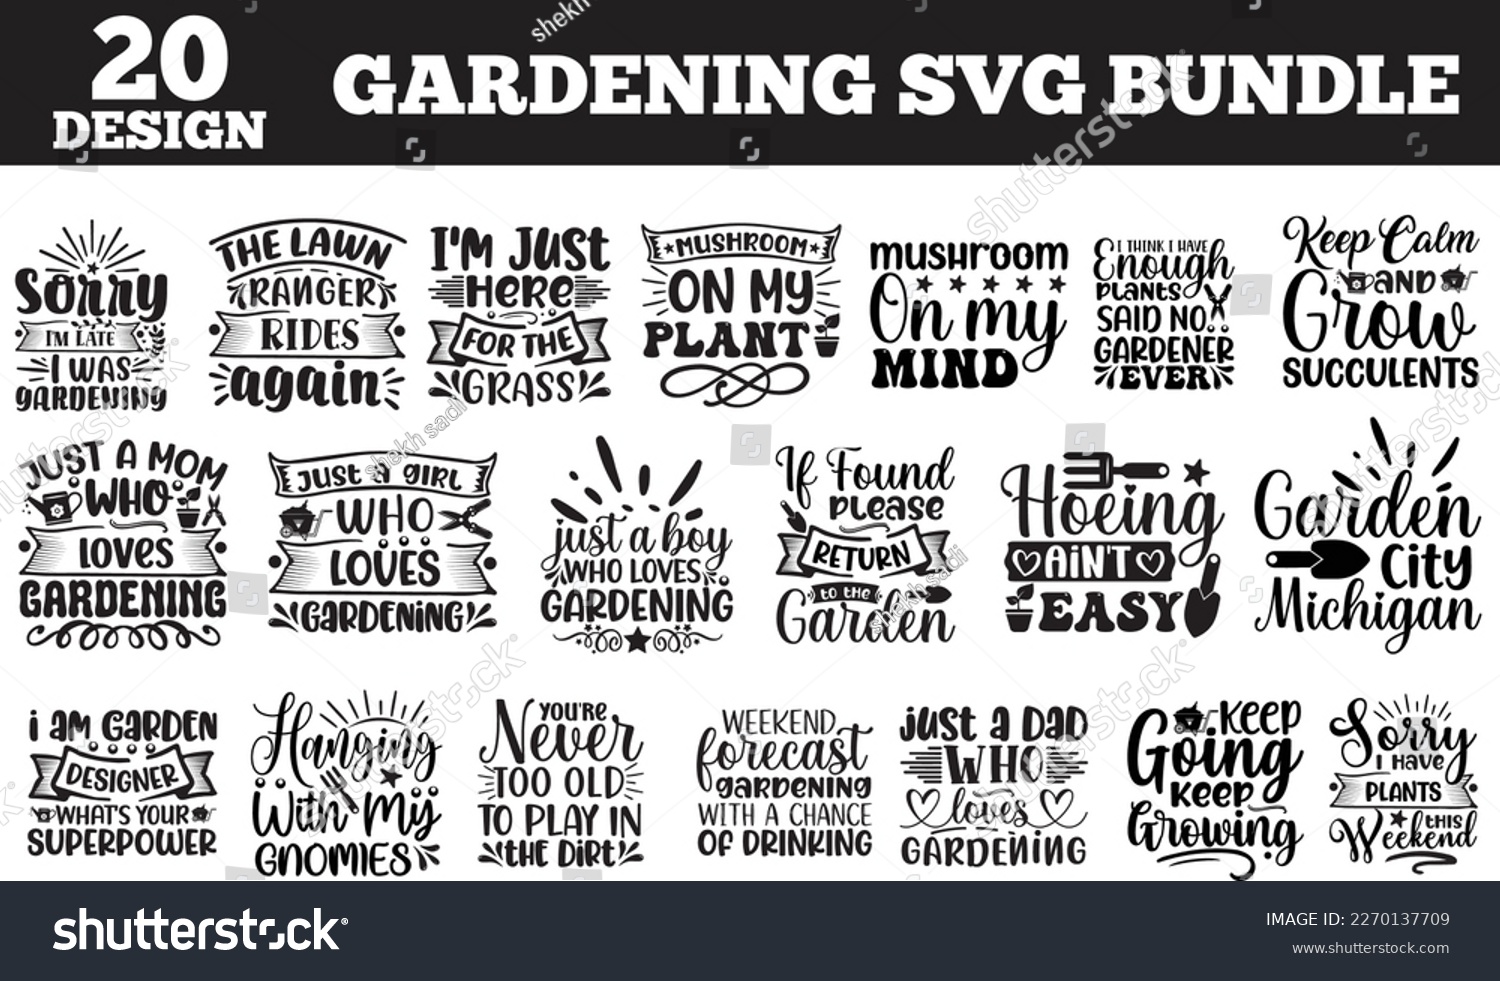 SVG of gardening svg bundle
gardening svg bundle svg